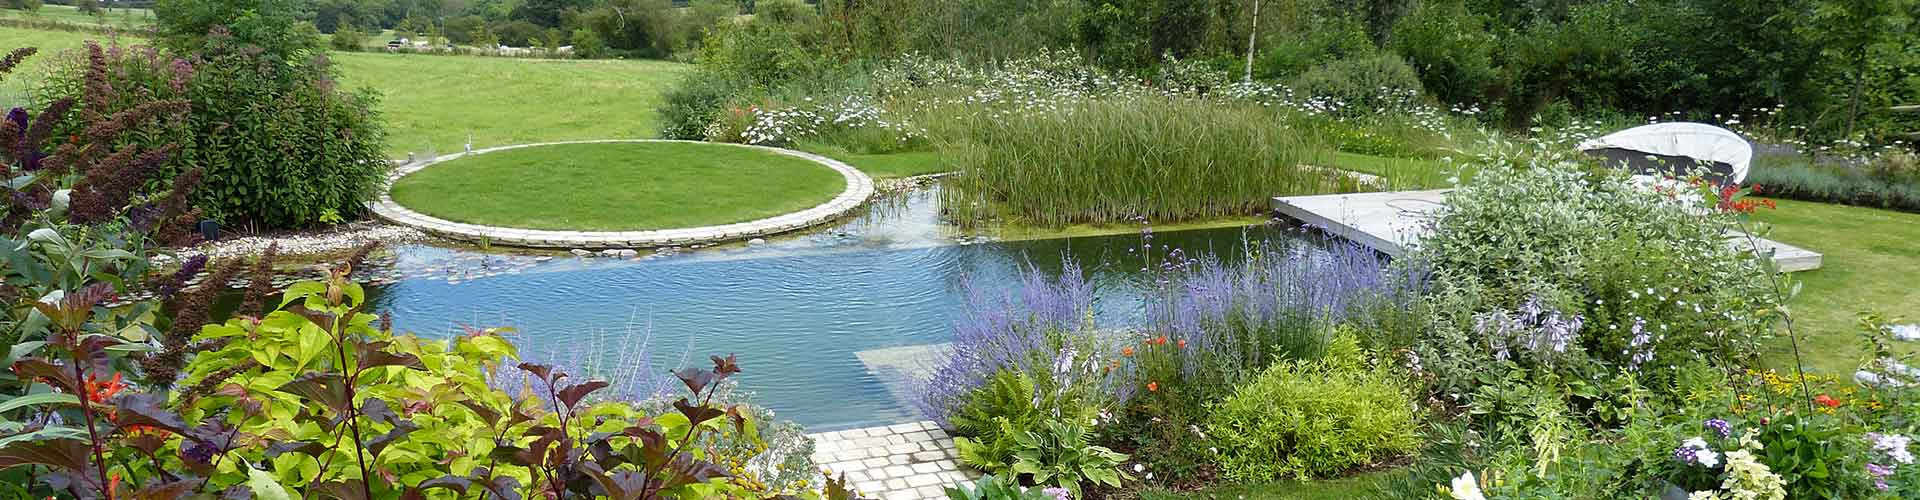 gardens for relaxing